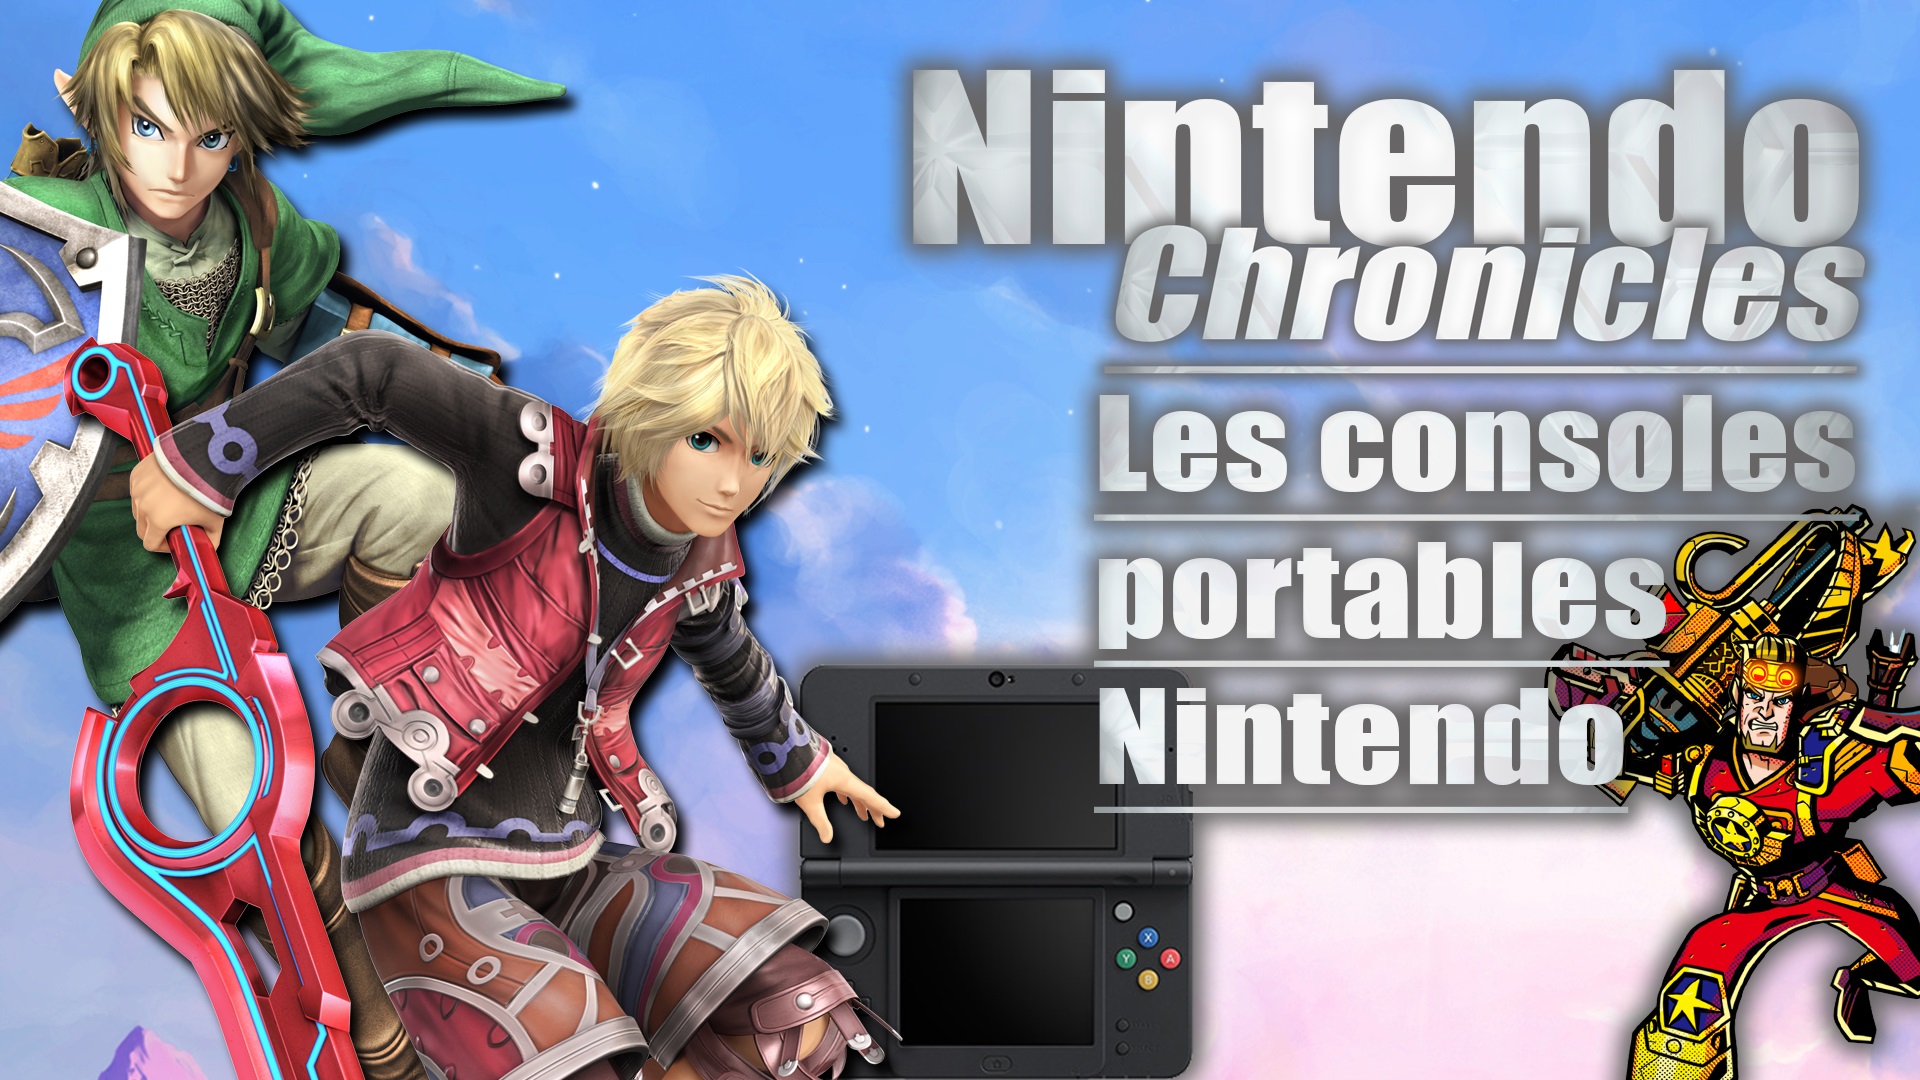 Nintendo Chronicles 1 – Les consoles portables Nintendo – Preview de Code Name: S.T.E.A.M.